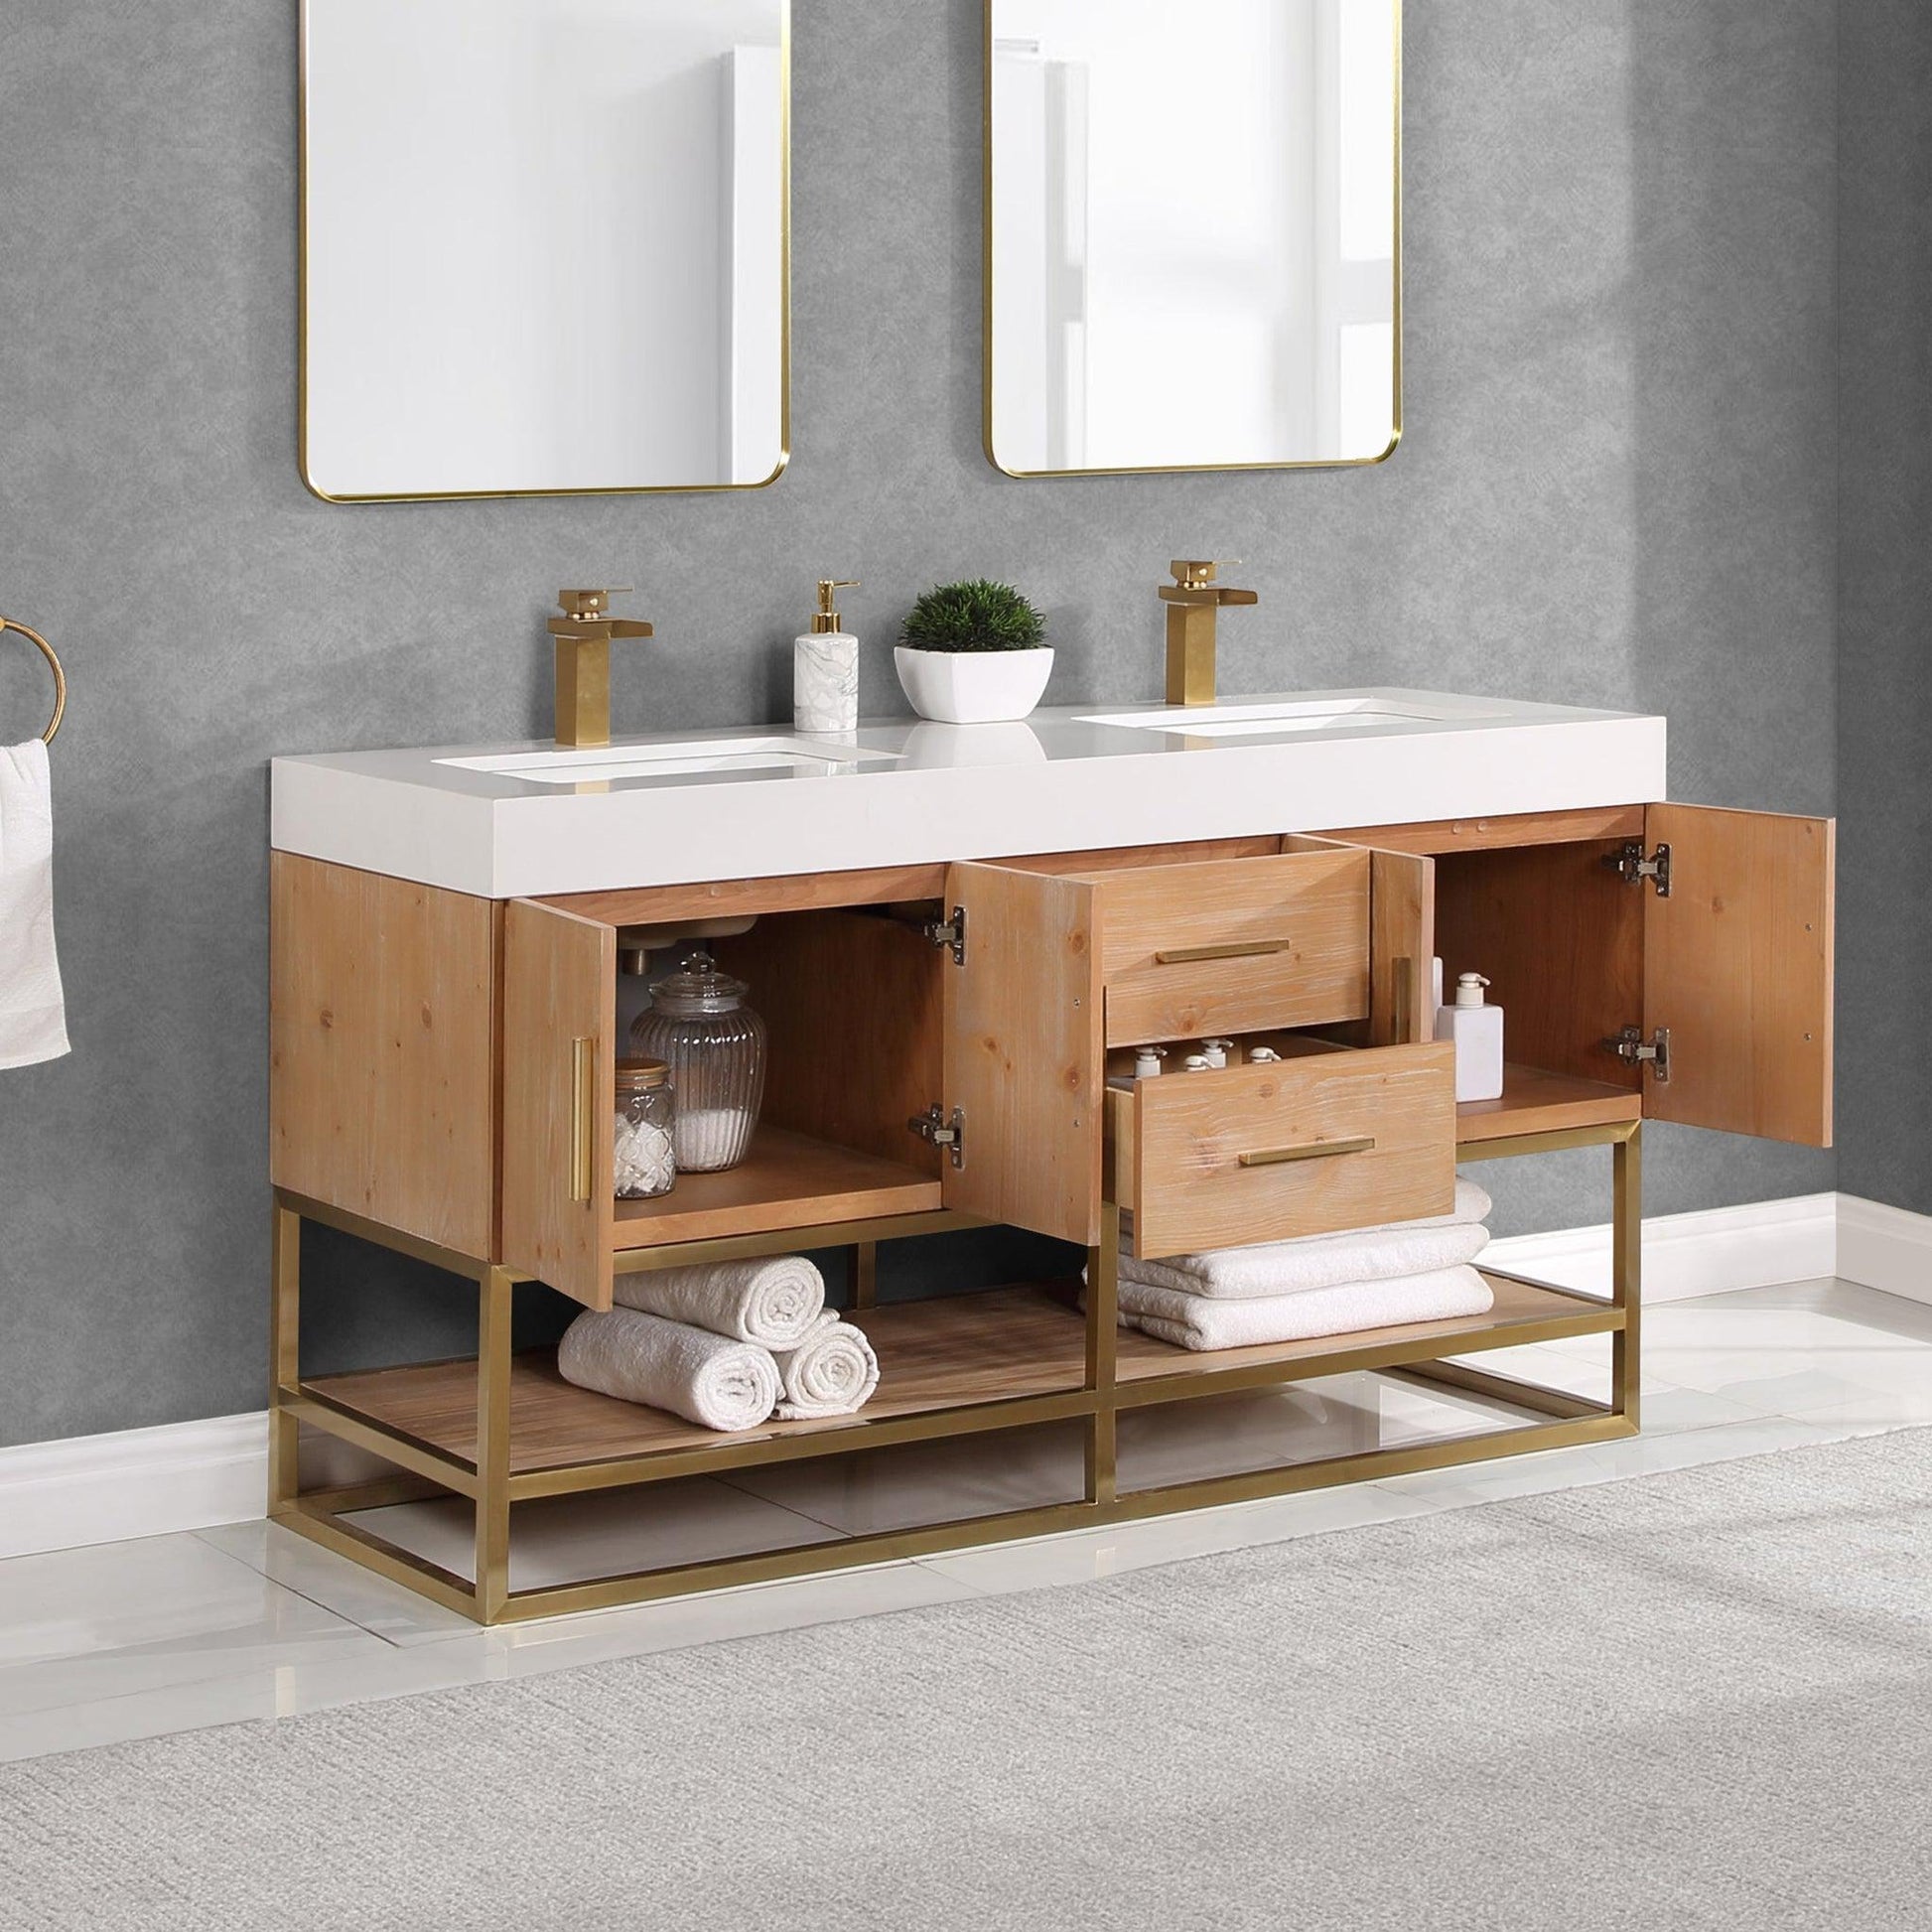 Farmhouse 72 in Double Sink Bathroom Vanity in Grey with Calacatta Gold  Quartz Countertop